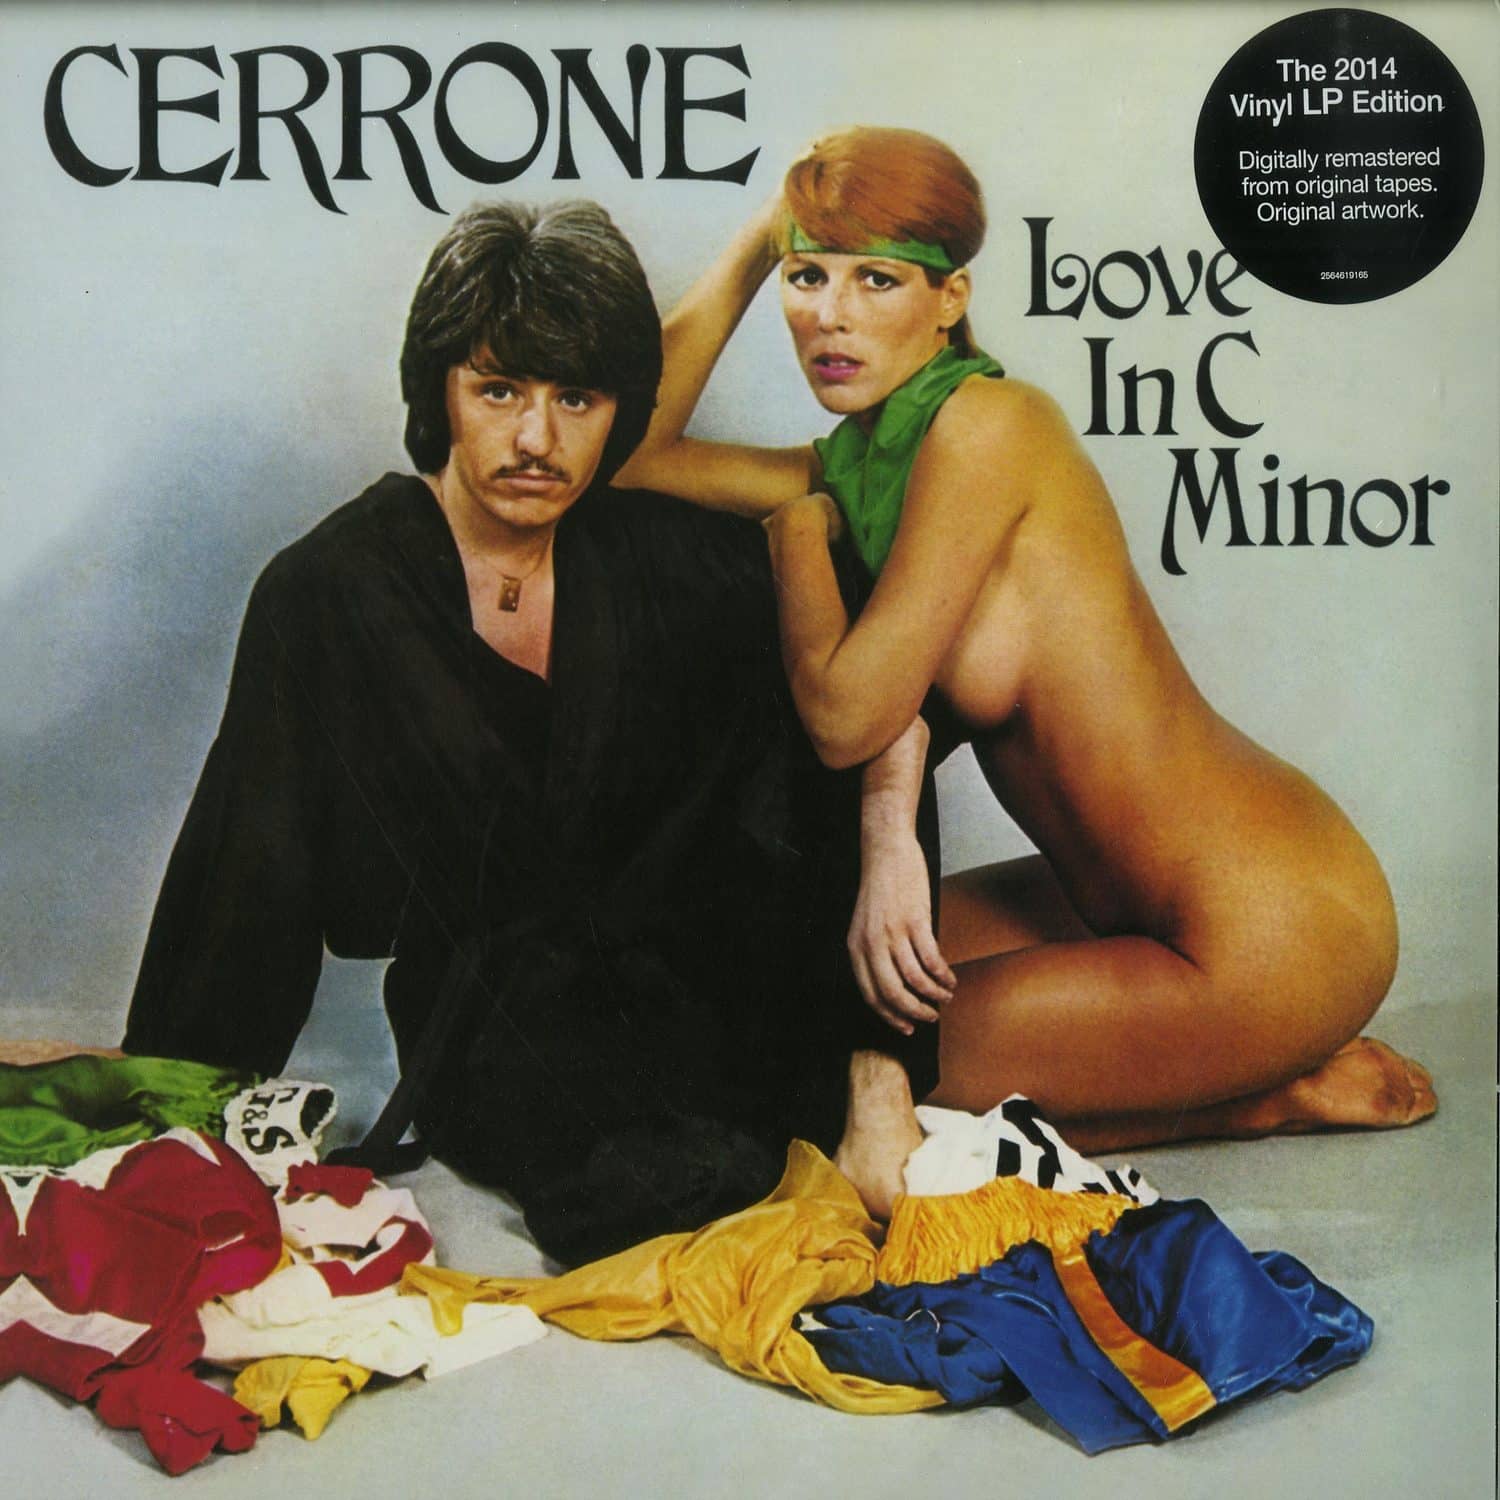 Cerrone - LOVE IN C MINOR 